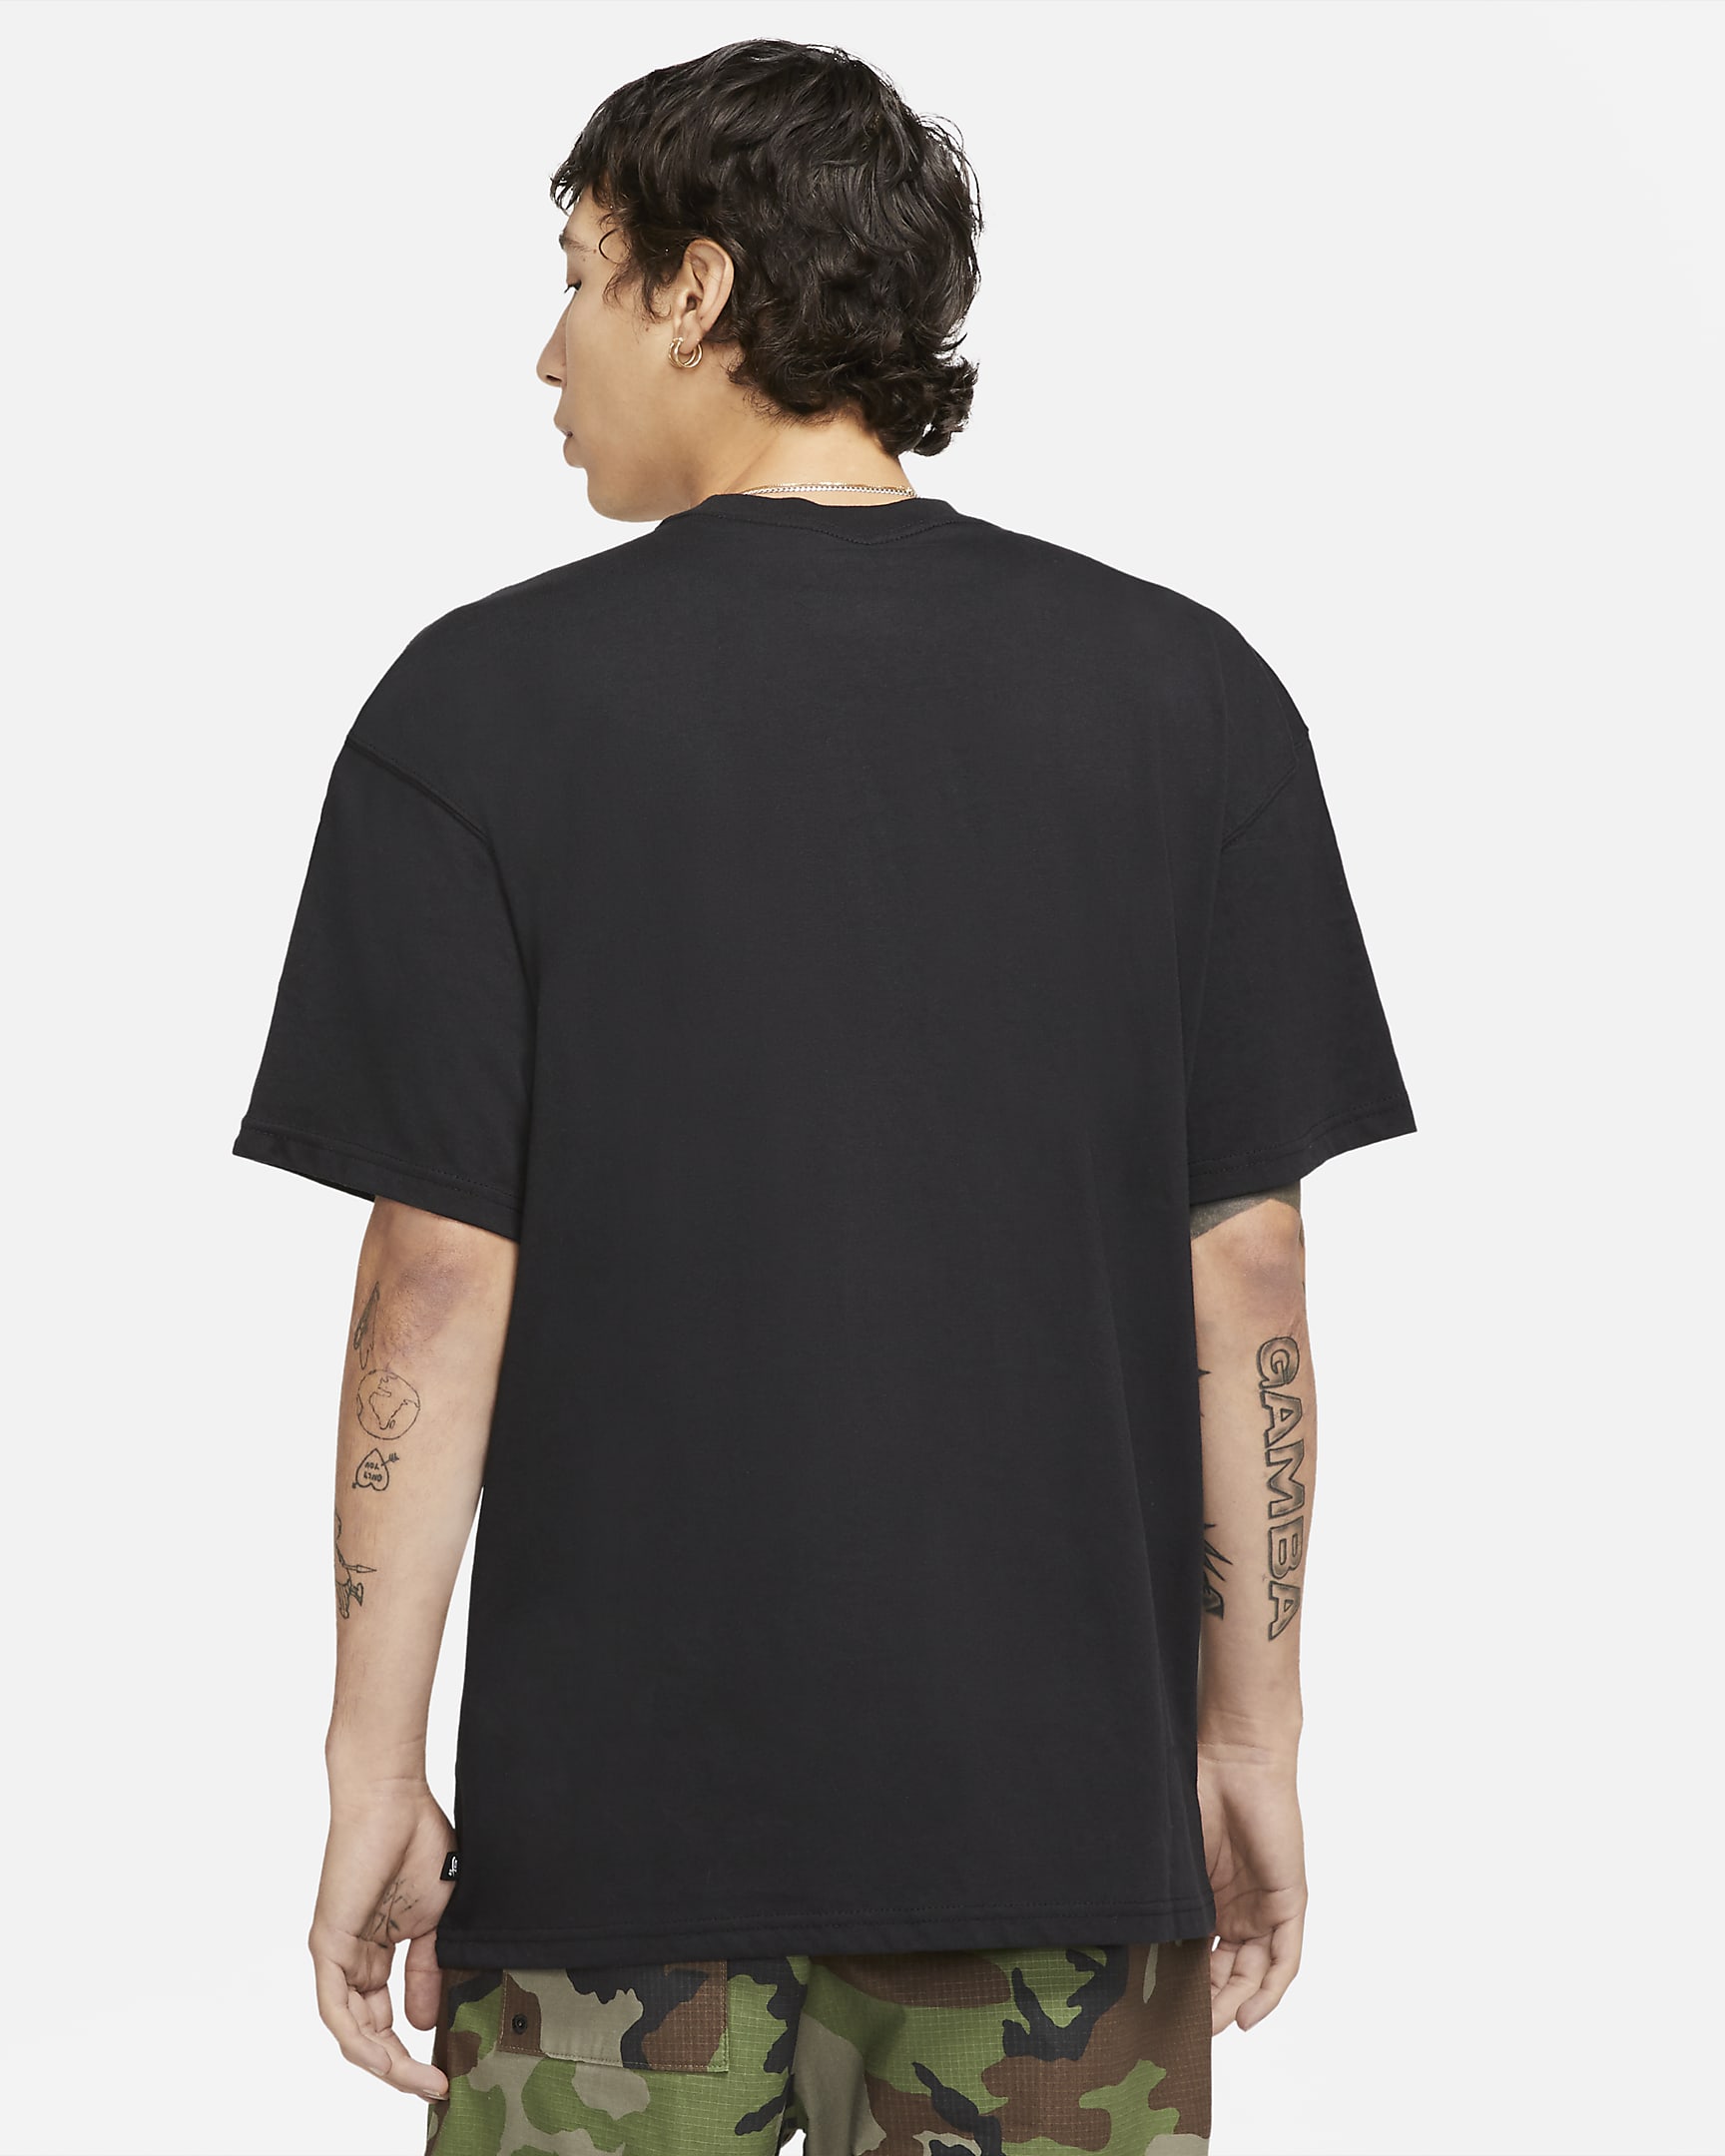 Nike SB Skateboard-T-Shirt mit Logo - Schwarz/Weiß